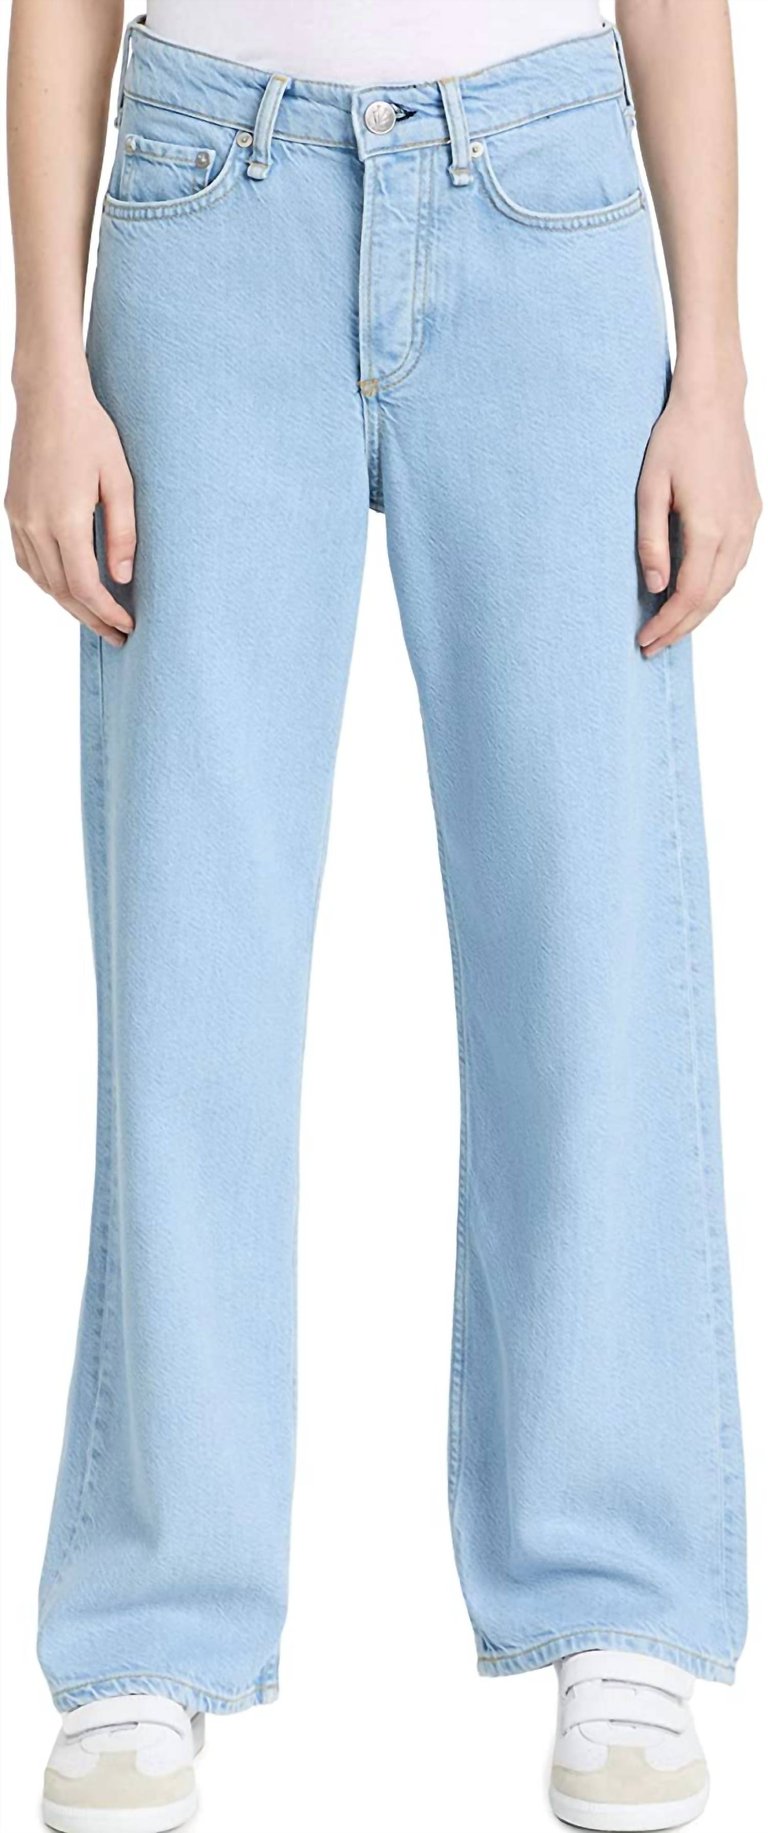 Logan Cotton Denim Jeans - Blossom Blue